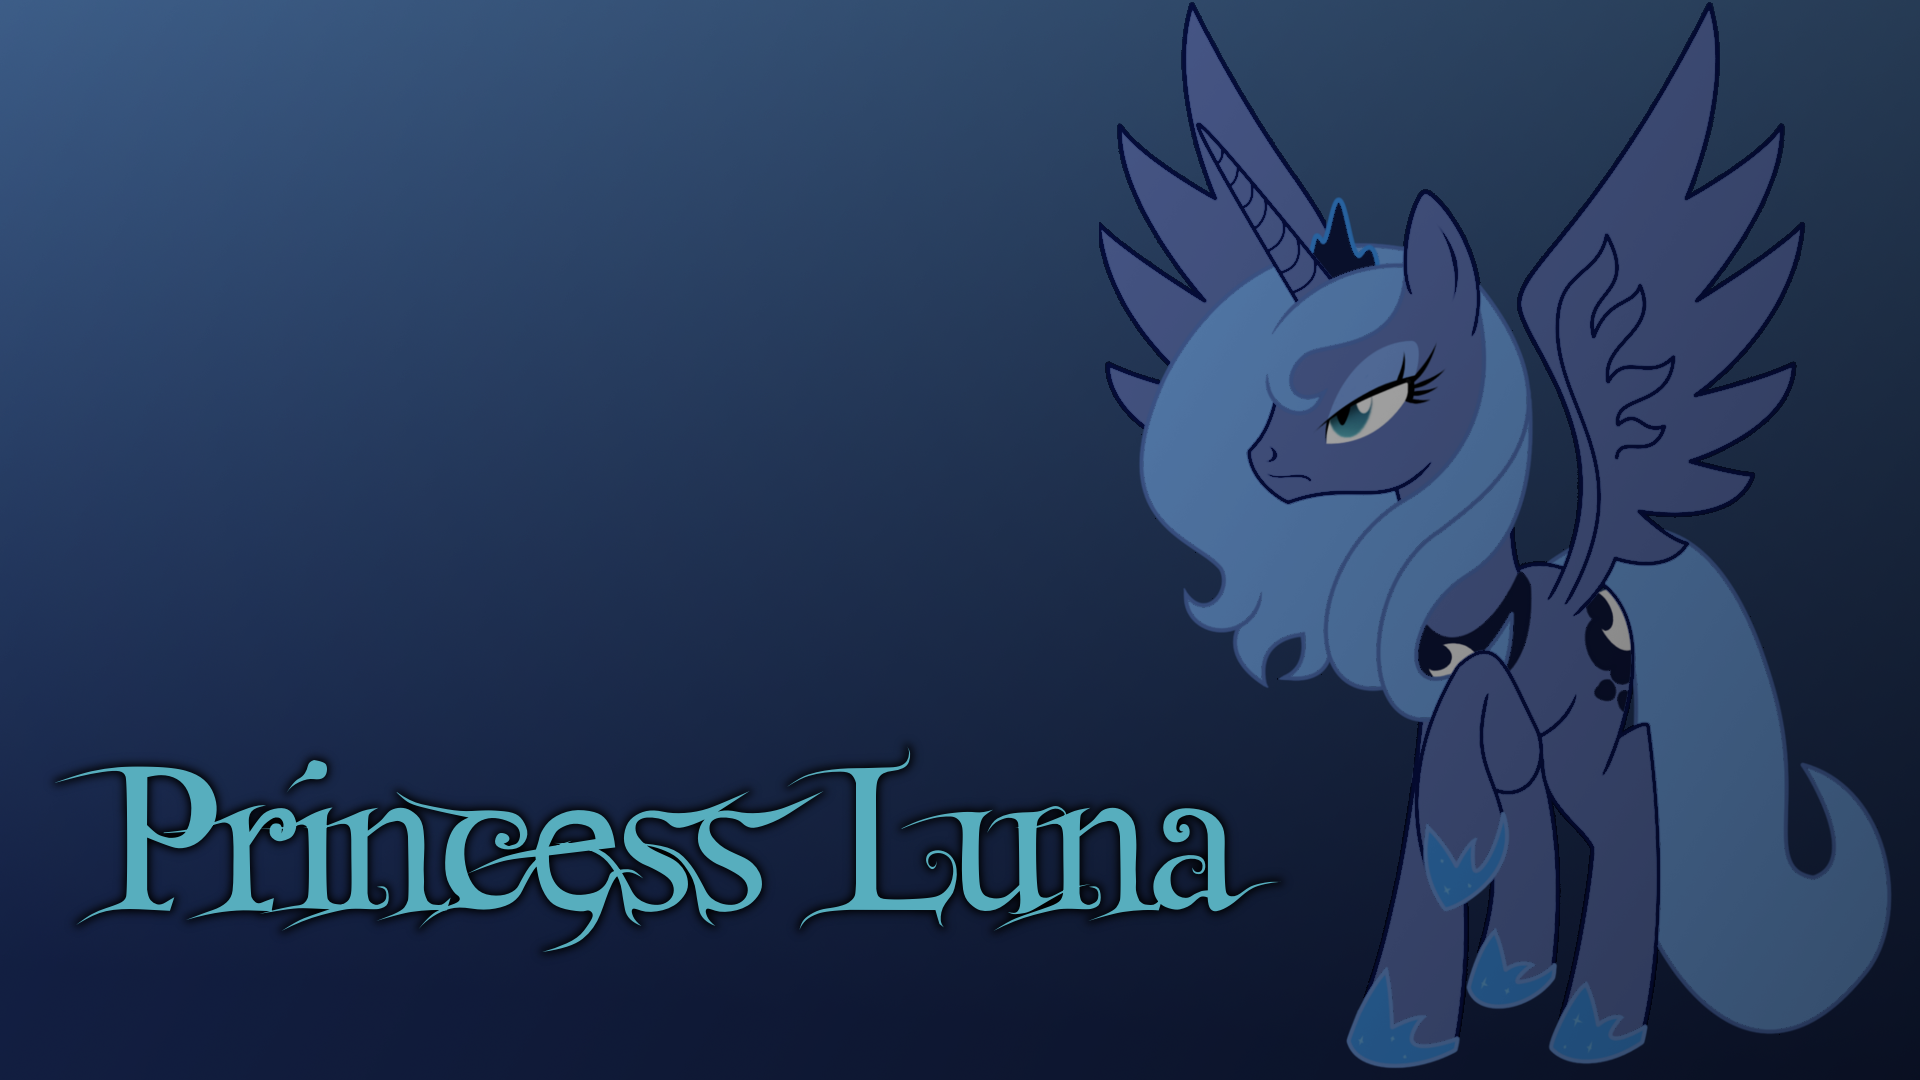 Princess Luna by eTonyOC and NightmareAsia